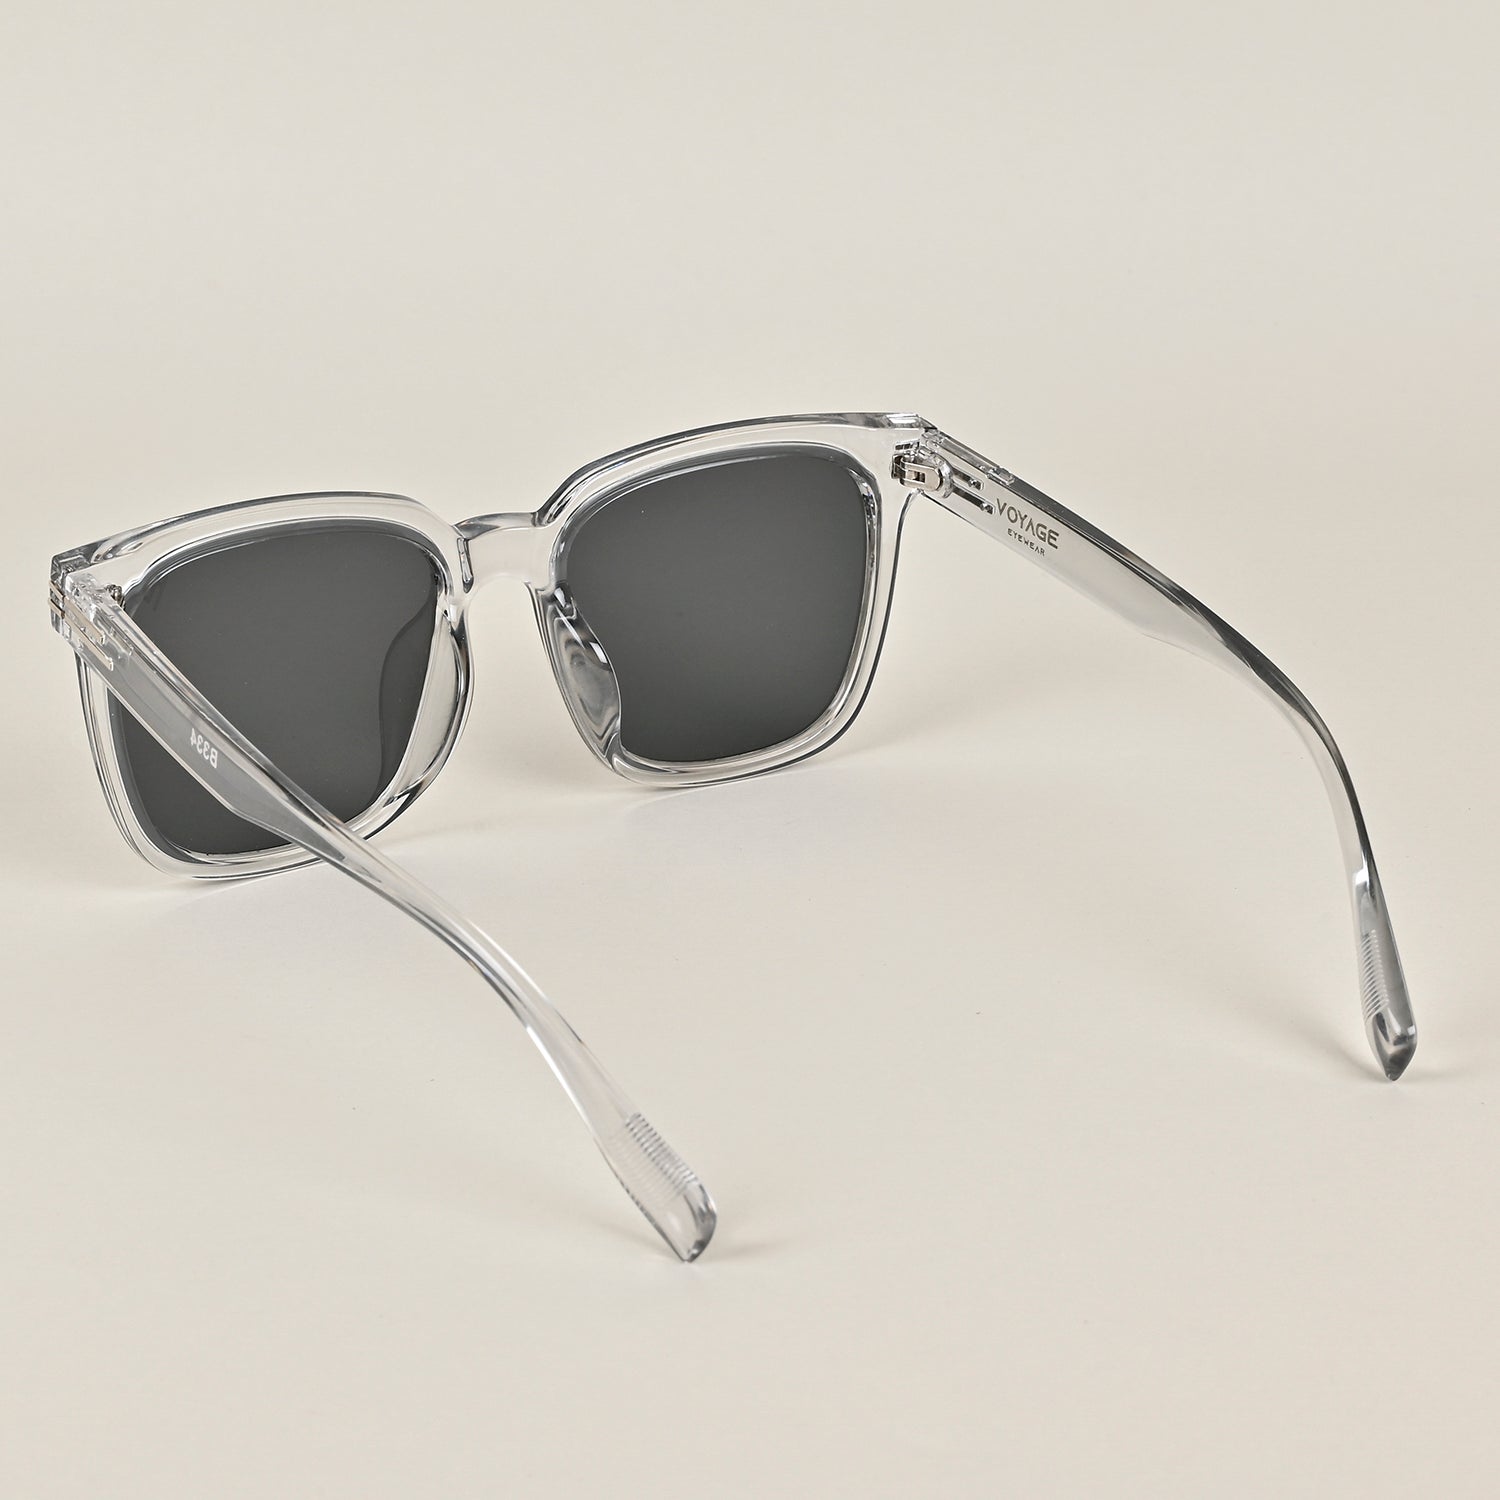 Voyage Gradient Grey Wayfarer Sunglasses - MG3631